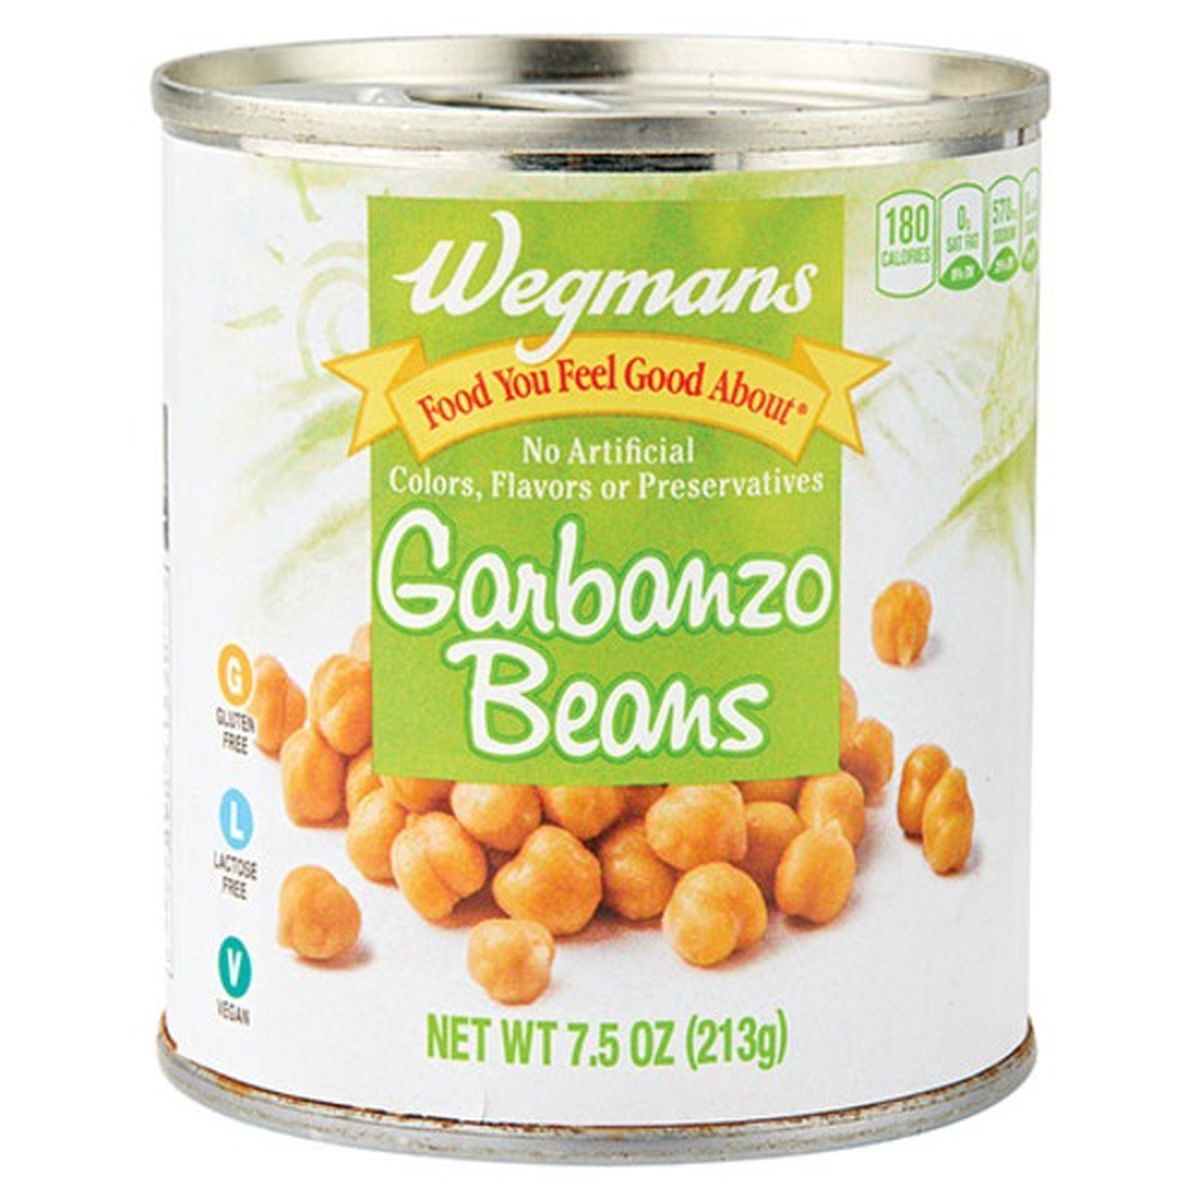 Calories in Wegmans Garbanzo Beans